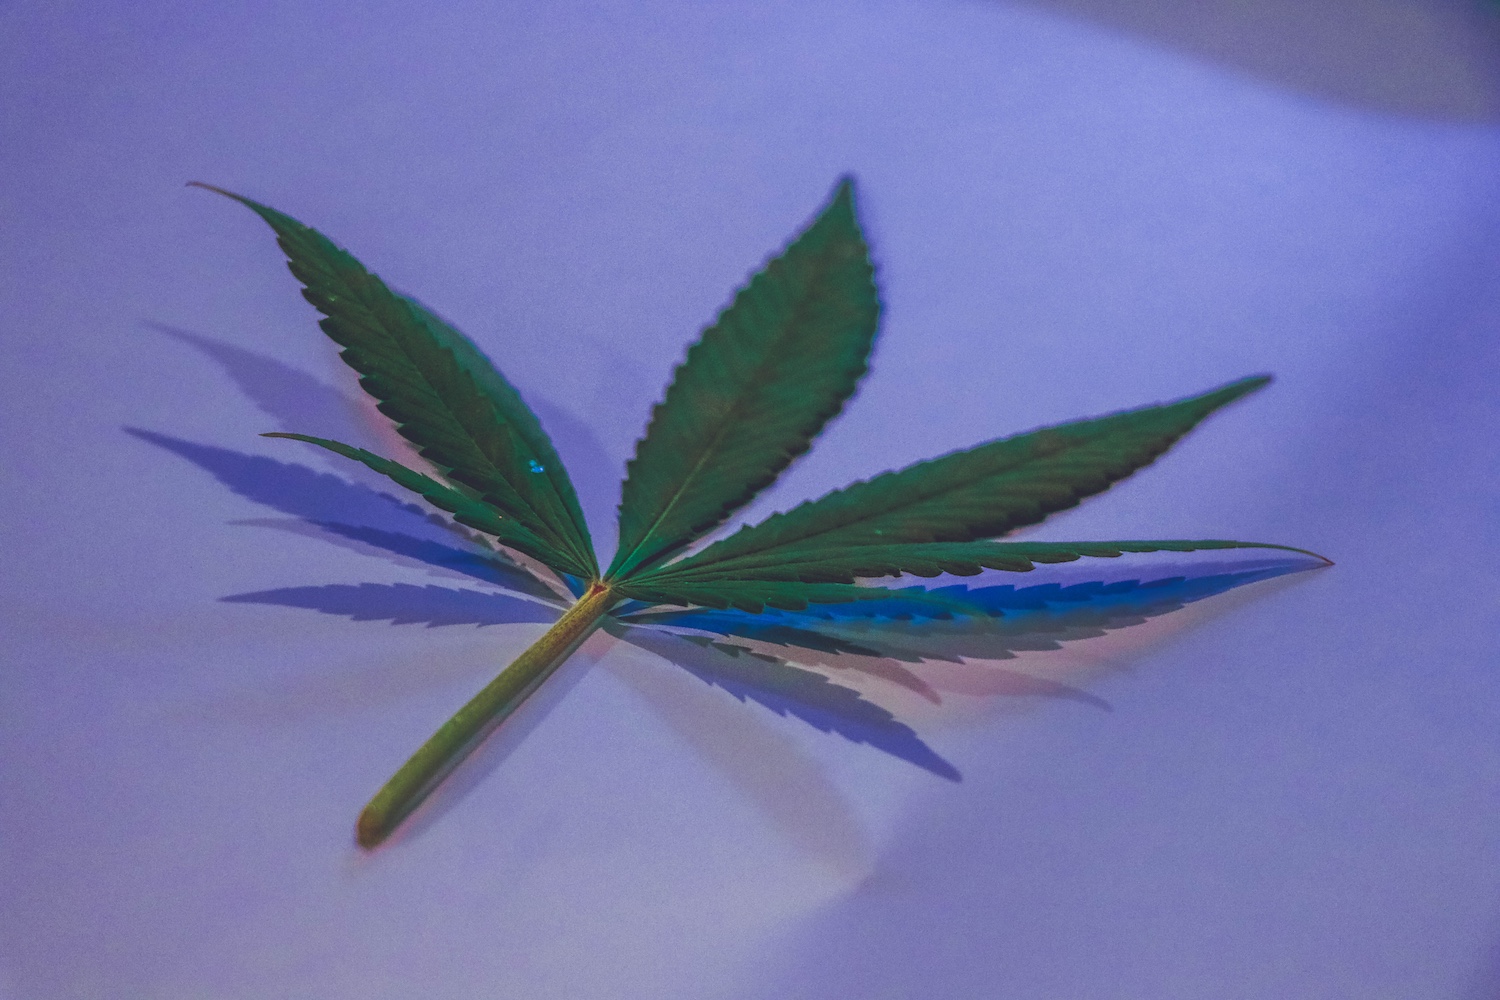 Cannabis leaf on a purple background